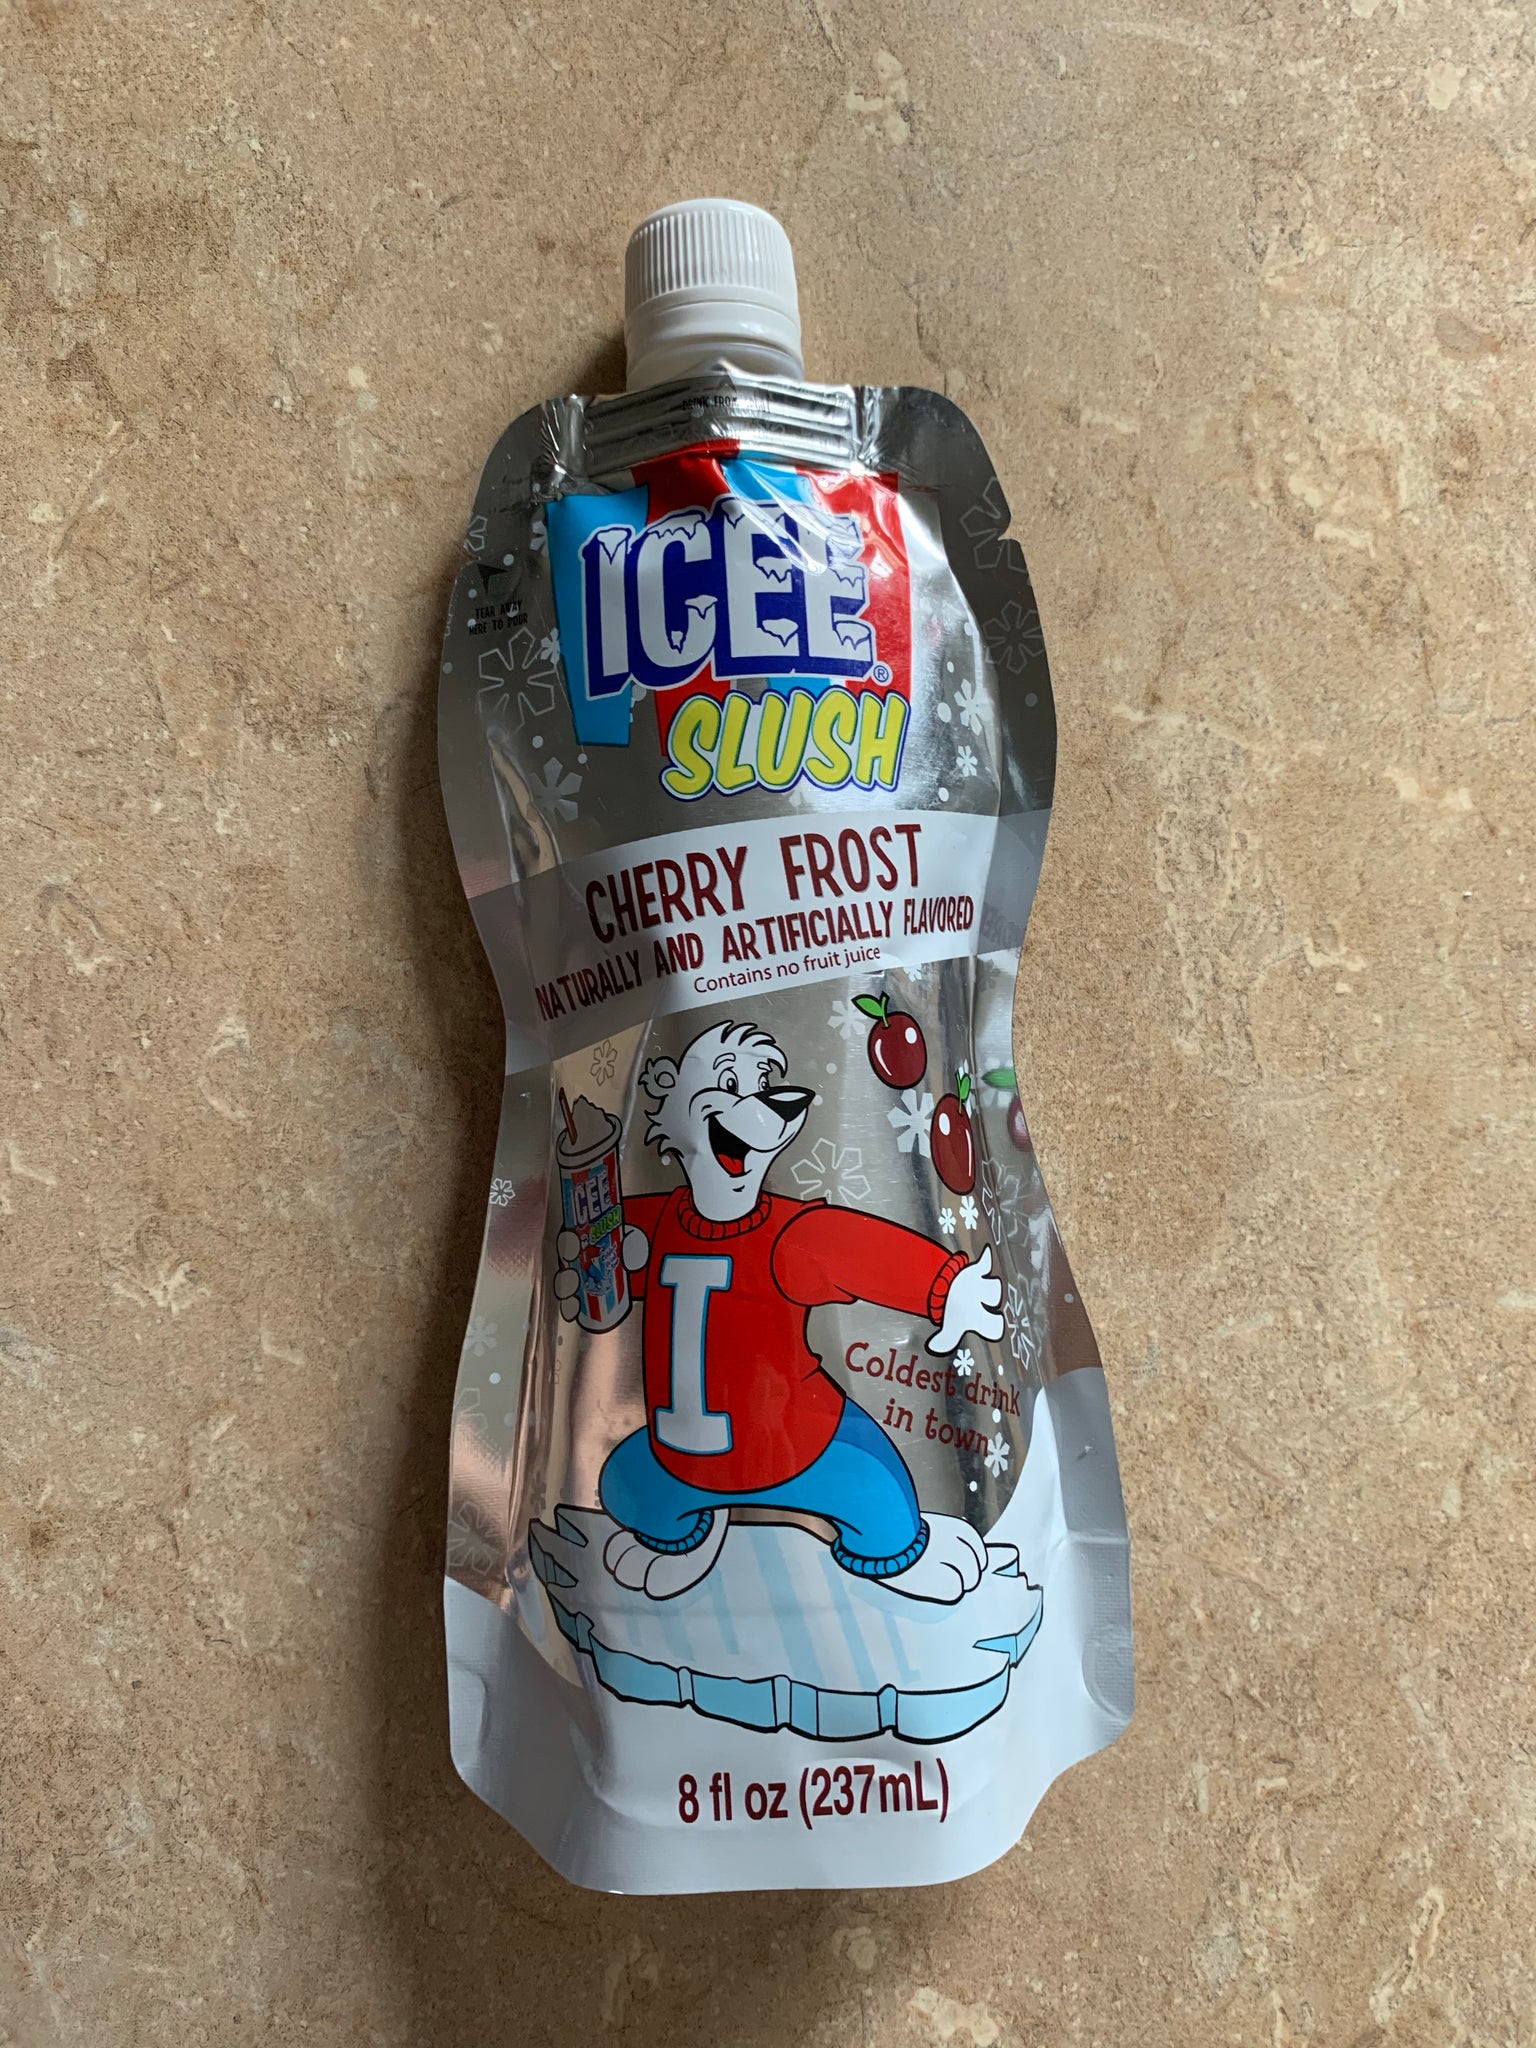 Icee Slush Cherry Frost Cerealizate Pricmx 2253